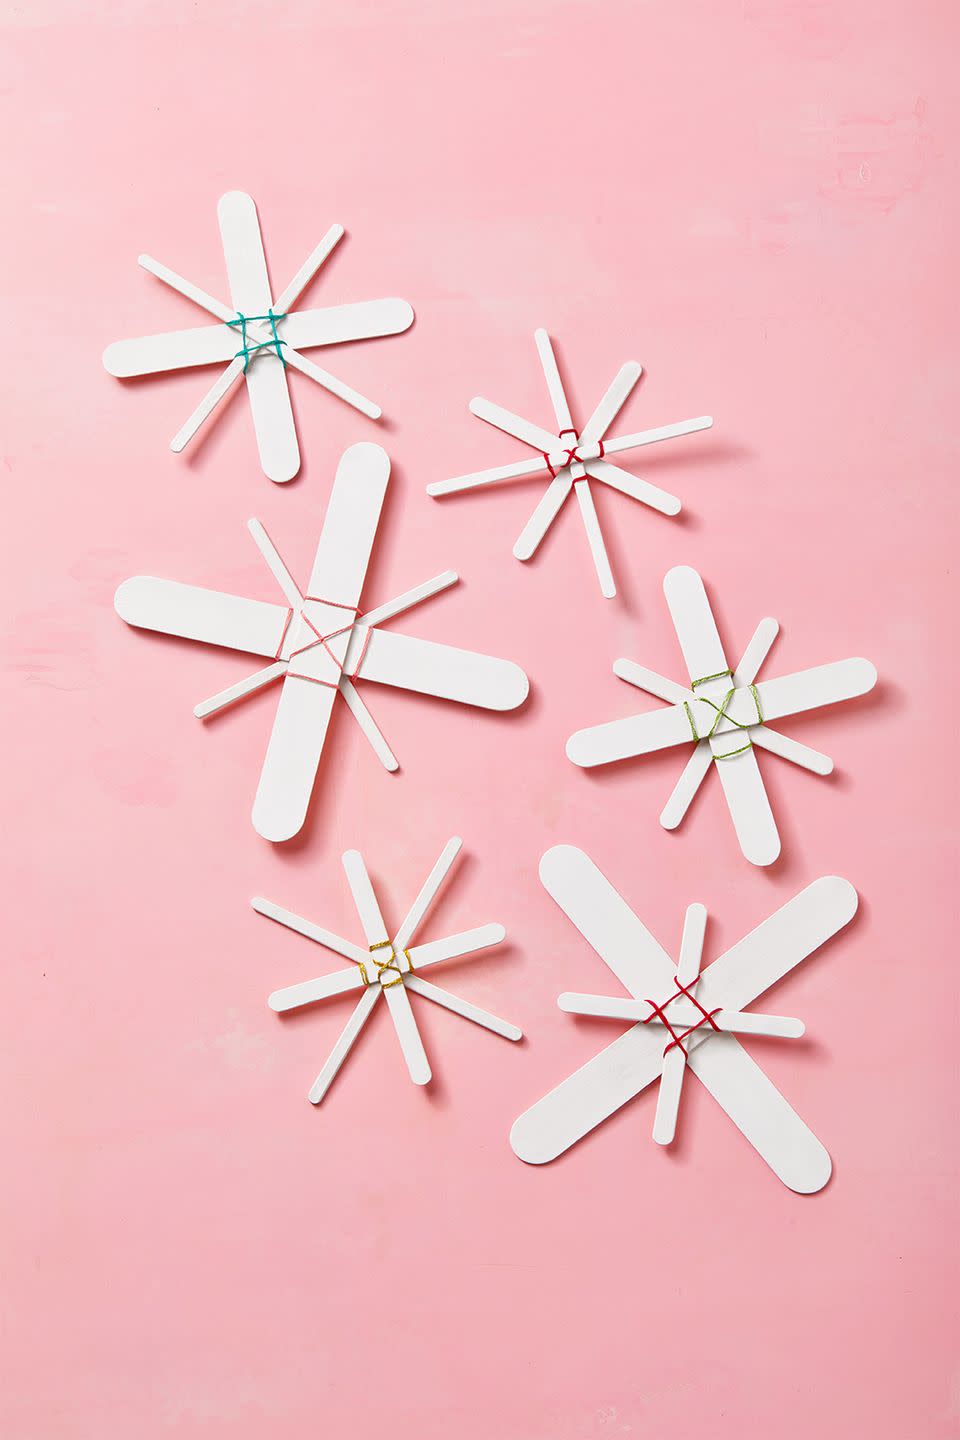 37) Popsicle Stick Snowflake Ornaments